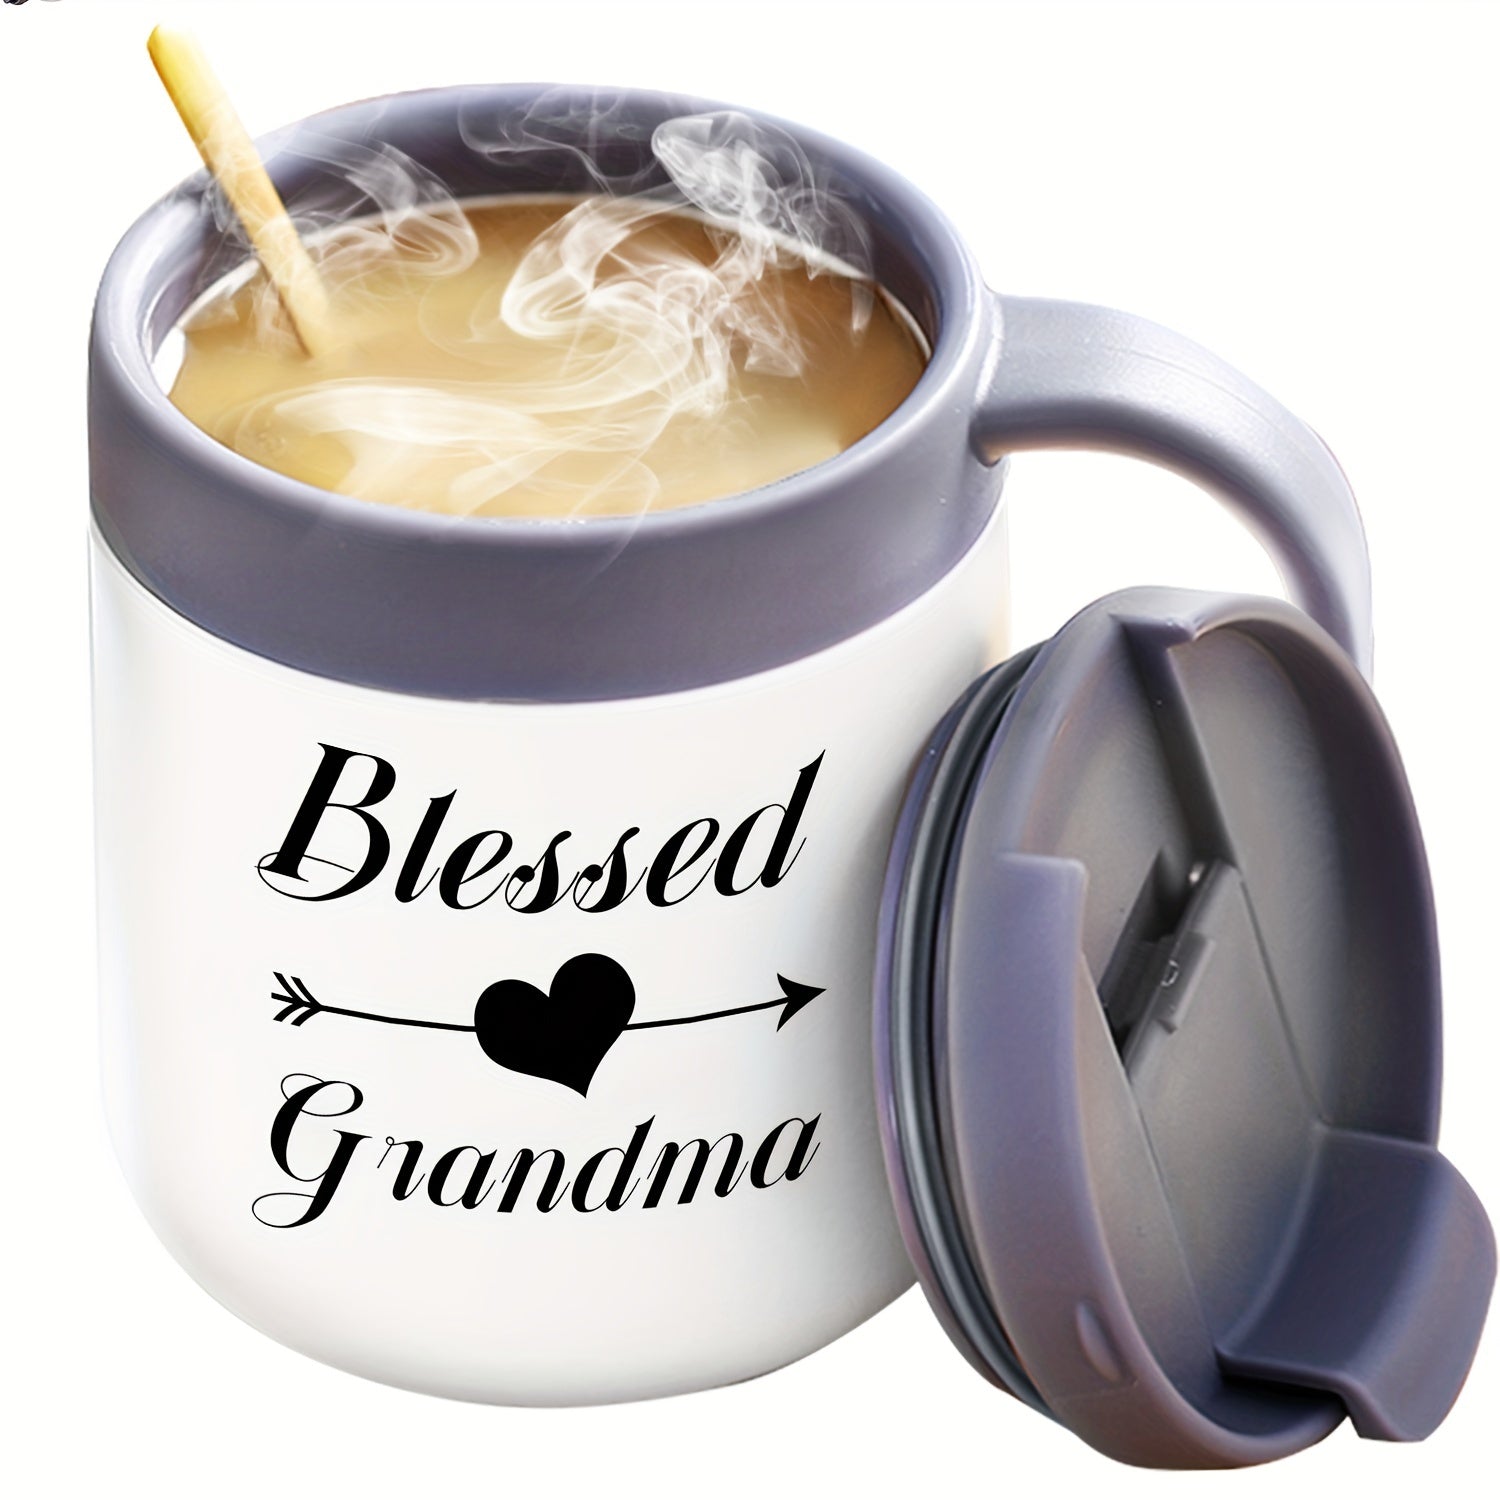 Blessed Grandma Christian Insulated Travel Mug 12 or 17 oz claimedbygoddesigns